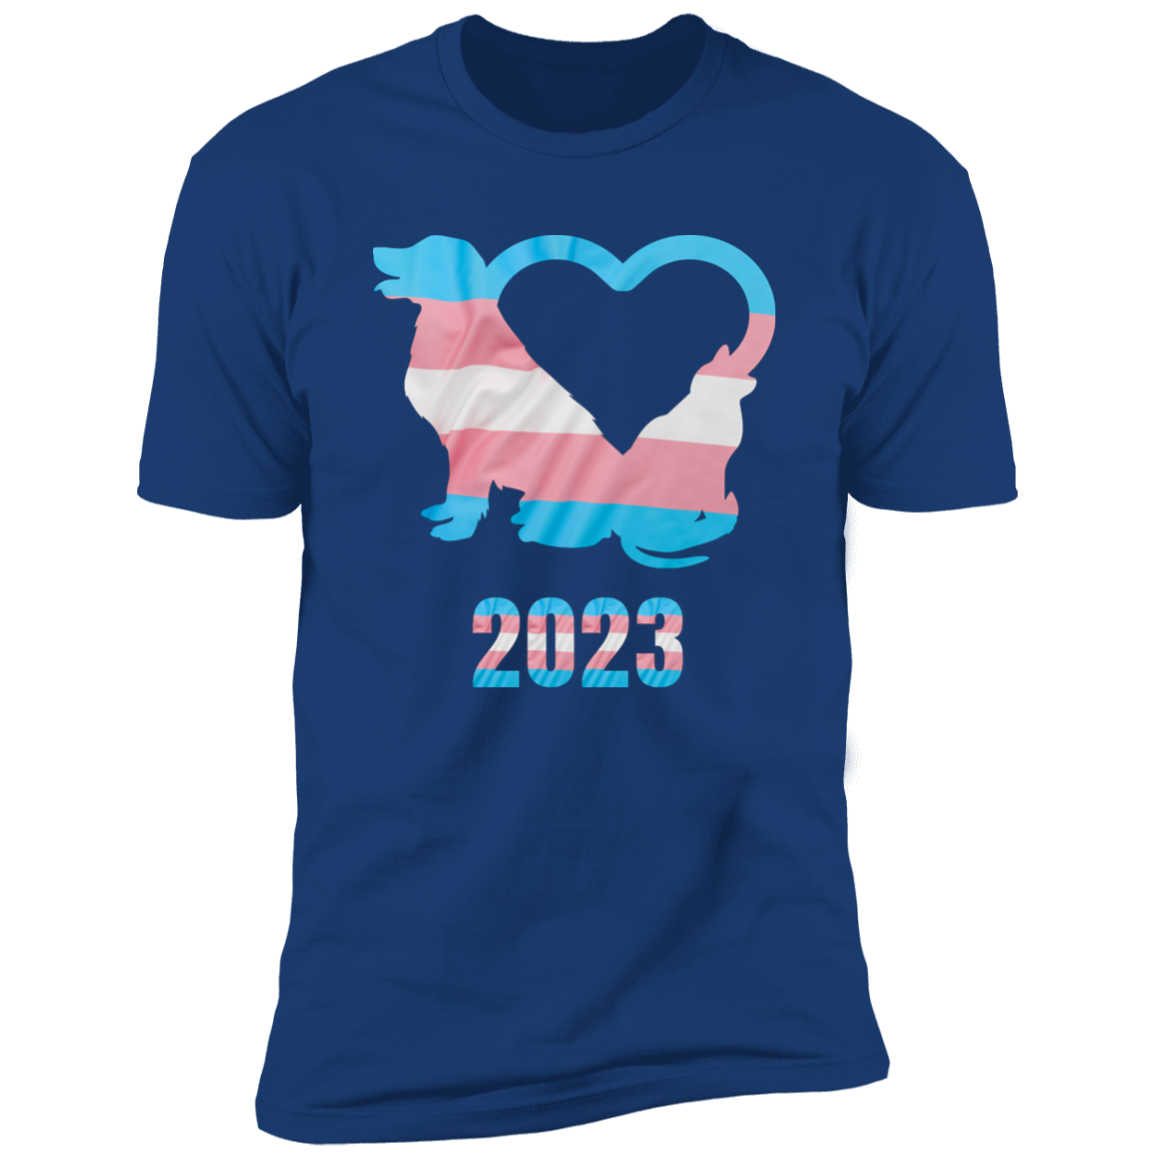 Trans Pride Dog & Cat Heart Pride T-shirt, Trans Pride Dog & Cat Shirt for humans, in royal blue